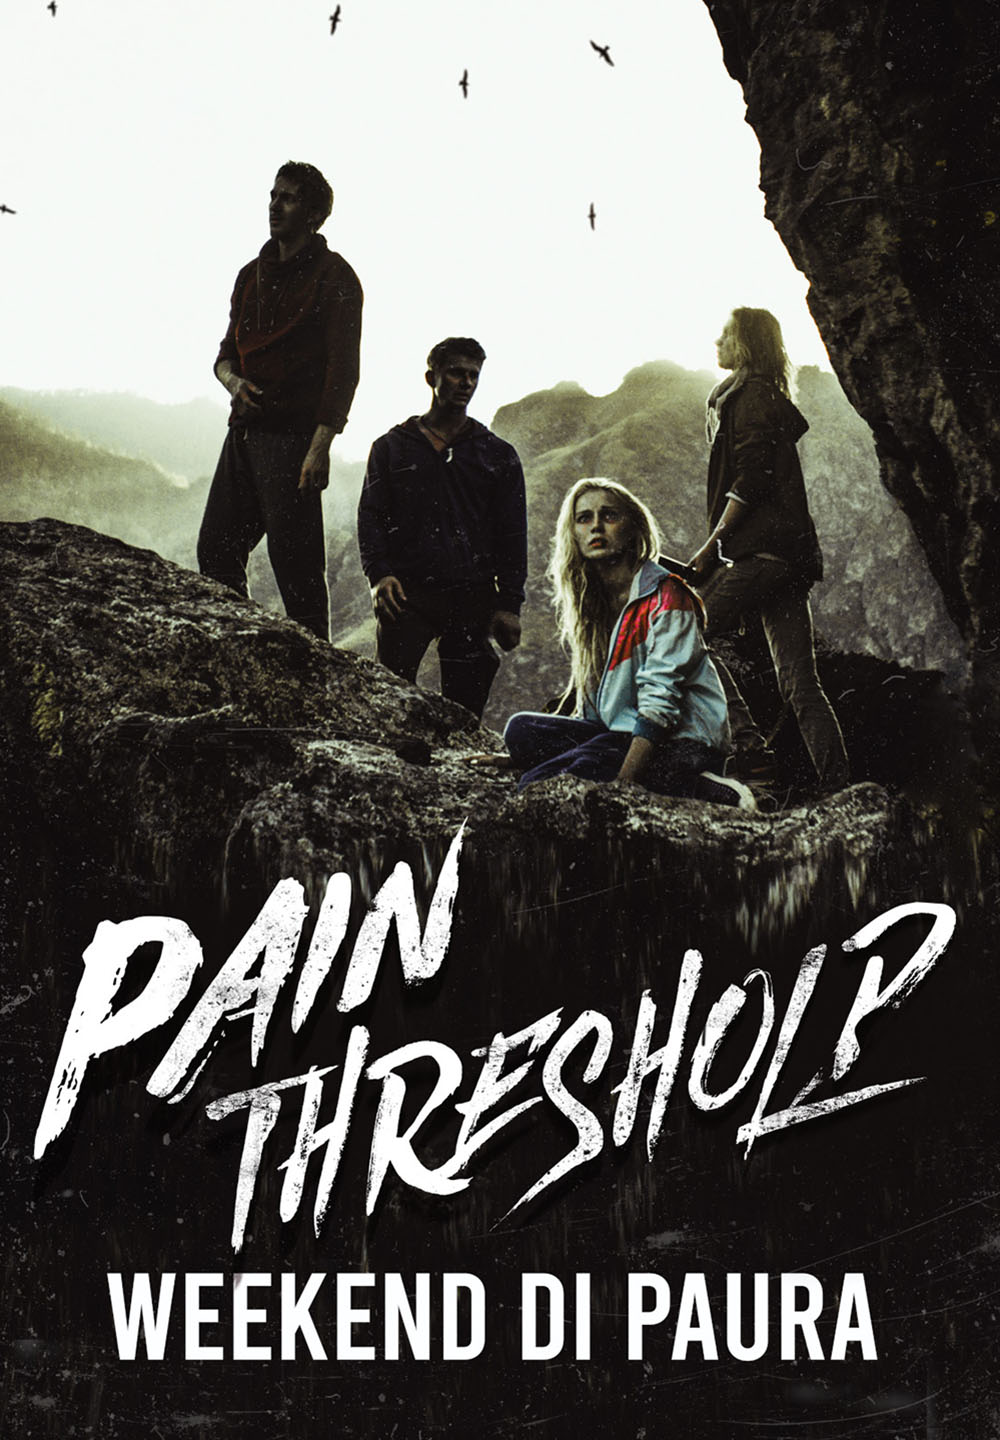 Pain Threshold – Weekend di paura [HD] (2019)